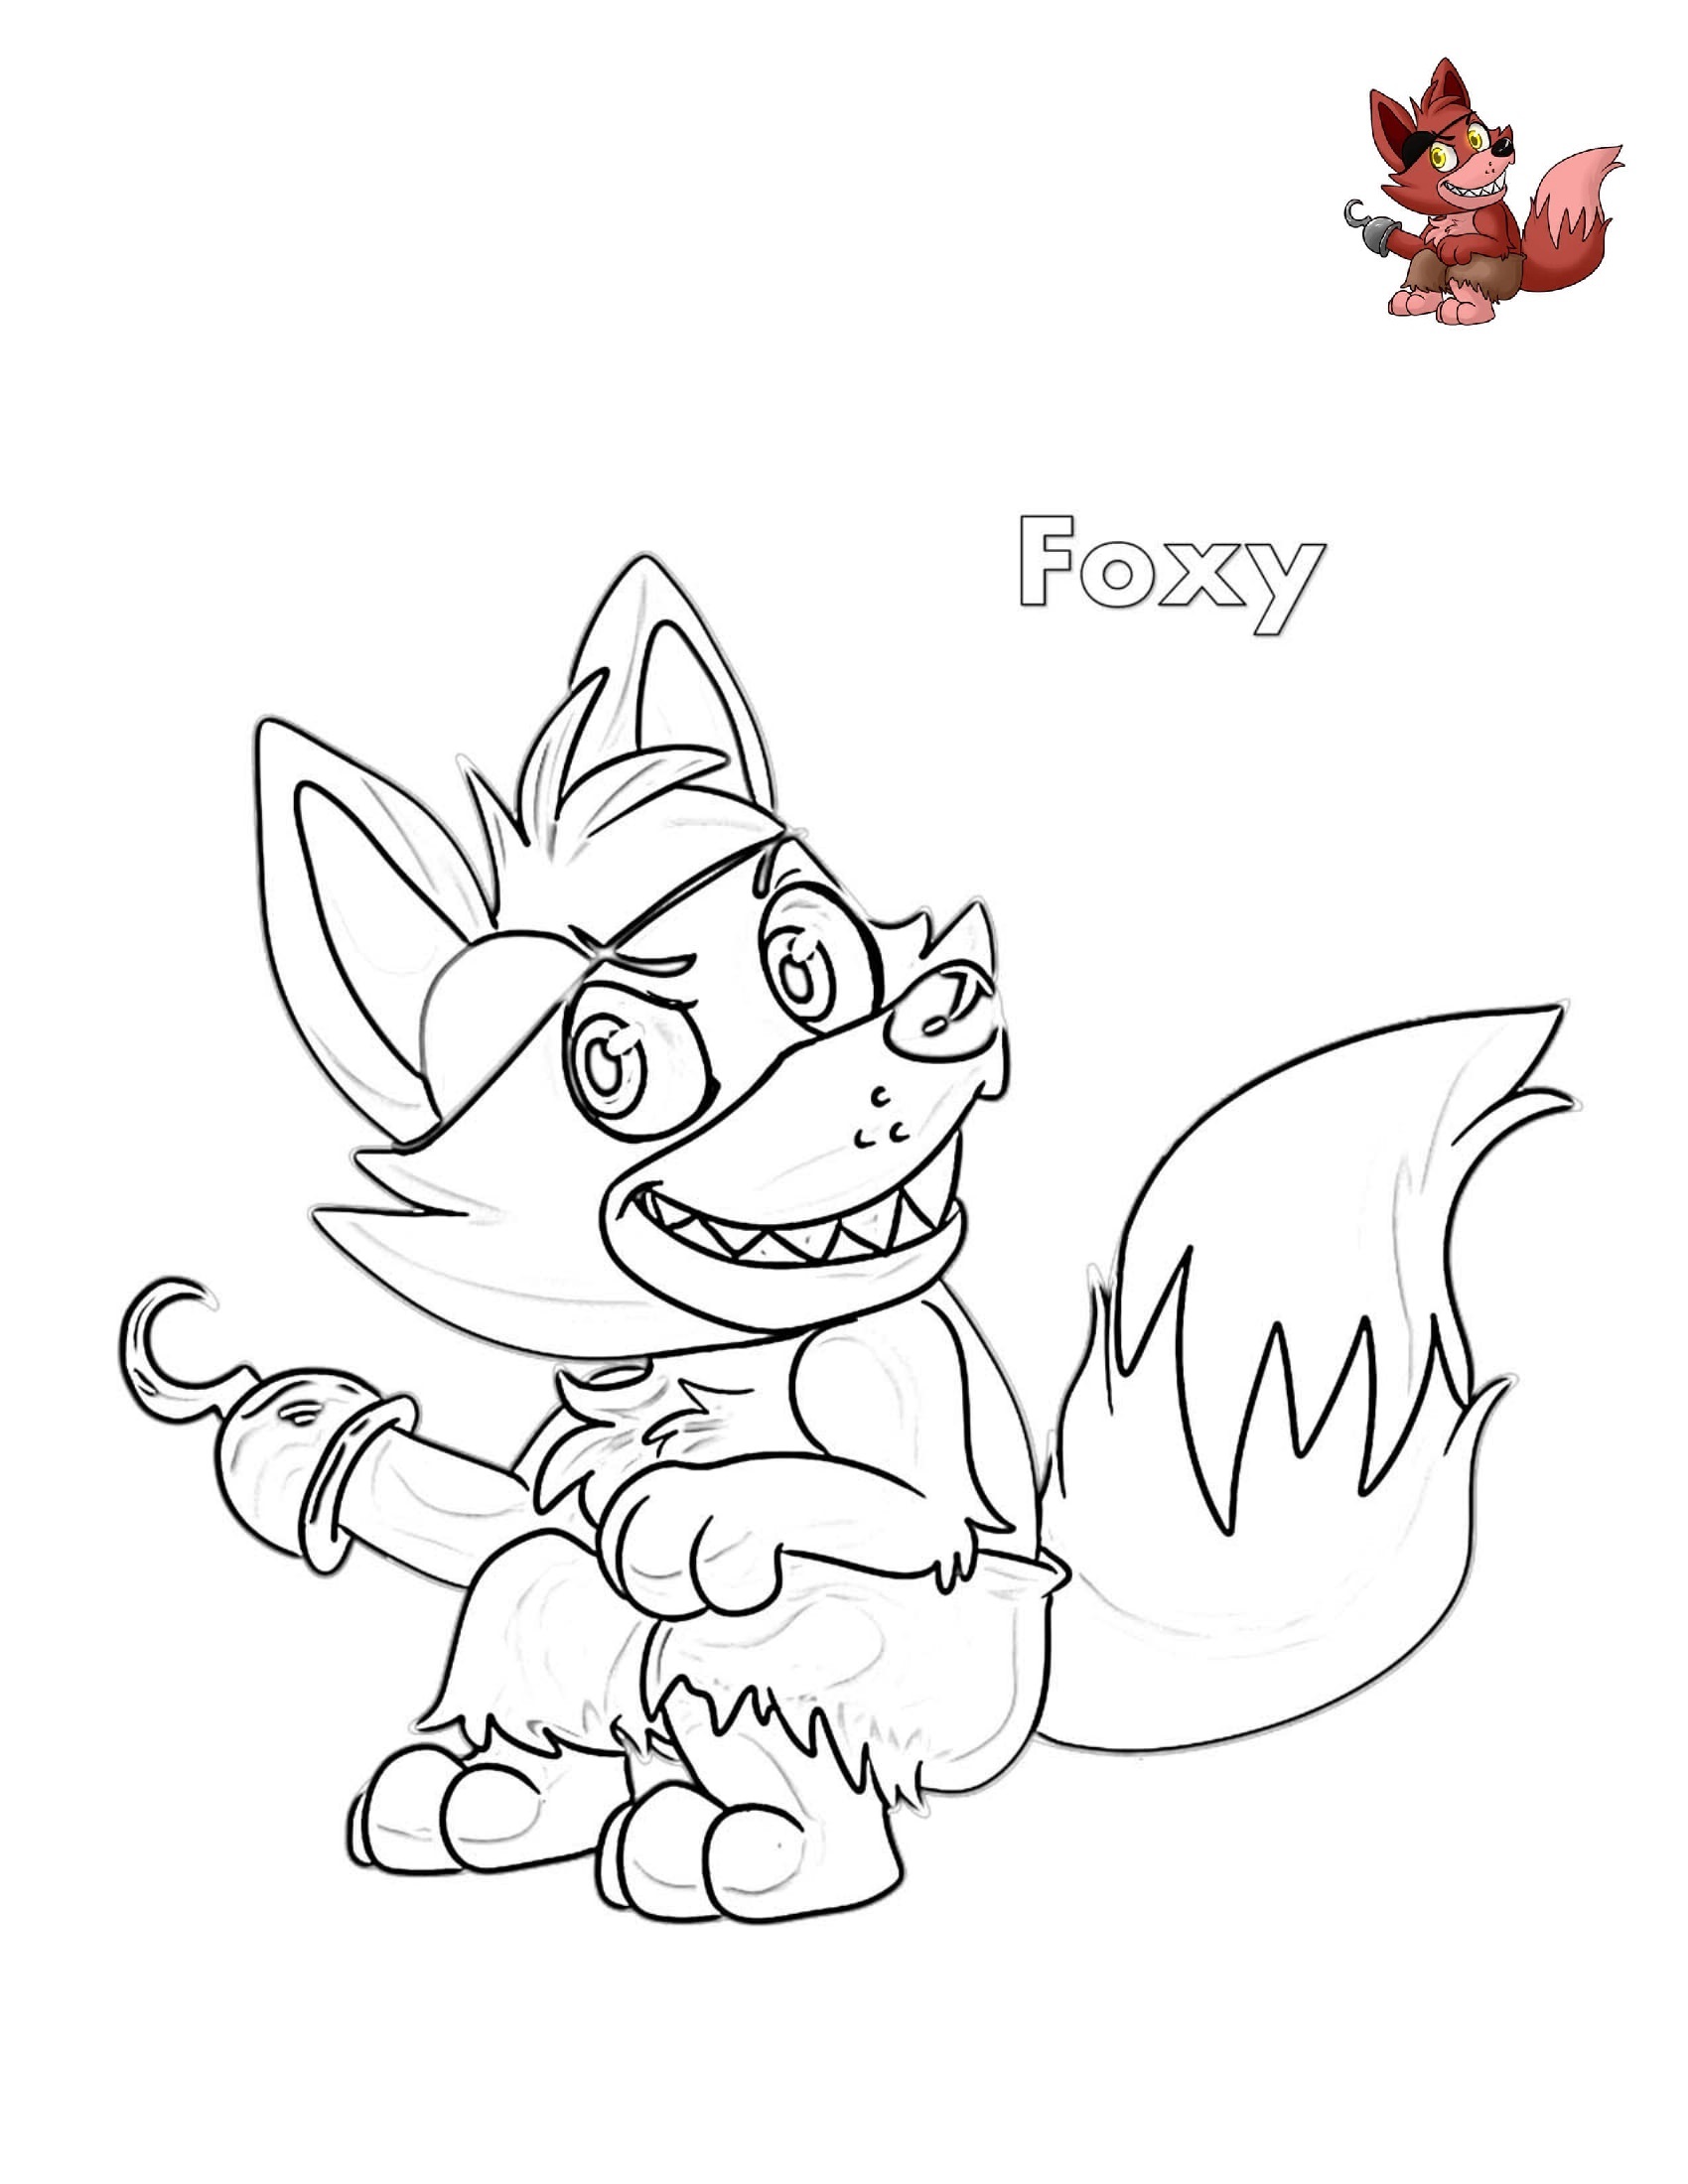 Cute Foxy FNAF Coloring Page